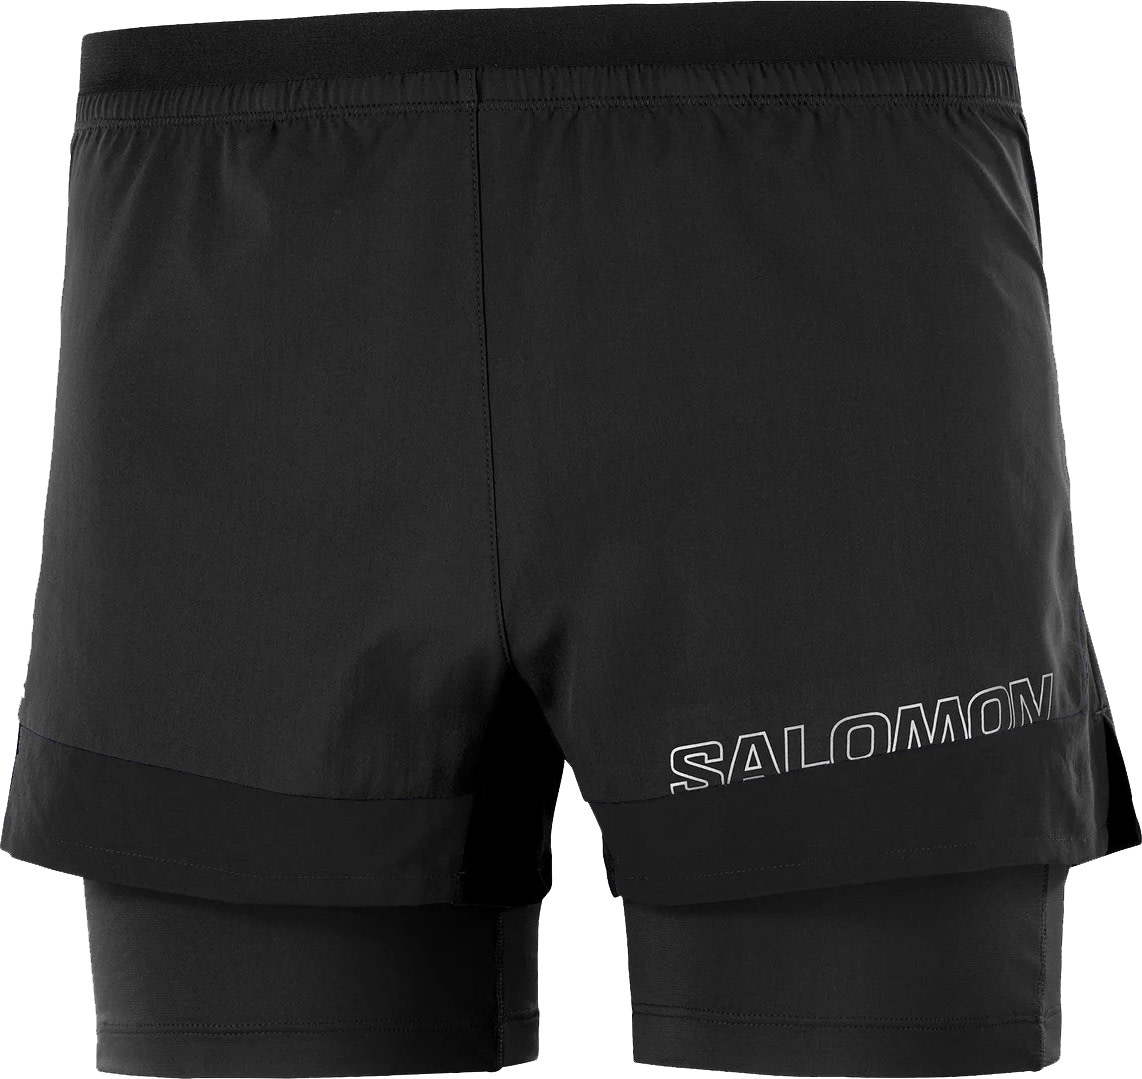 Salomon Men’s Cross 2in1 Shorts DEEP BLACK/